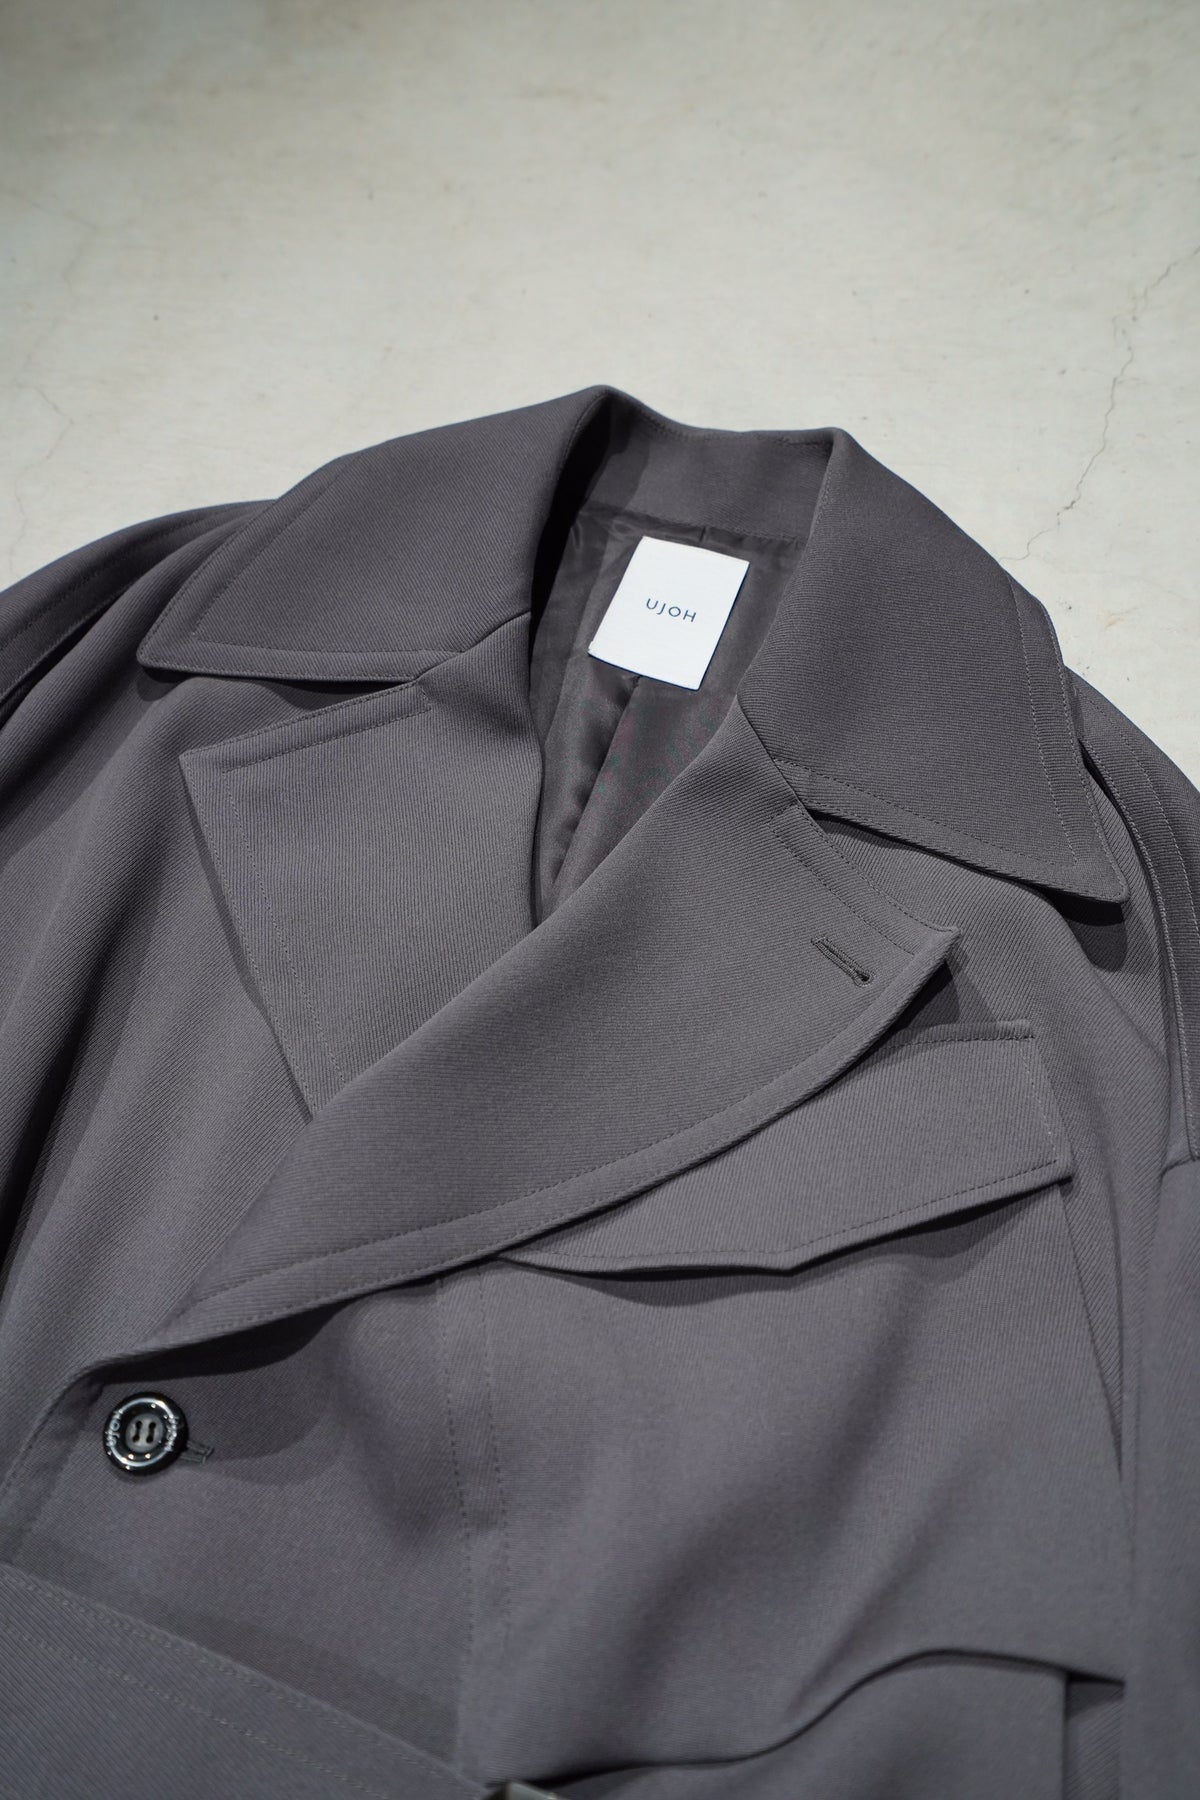 UJOH(ウジョー)のMotorcycle Coat(Charcoal Gray)(コート)の通販 